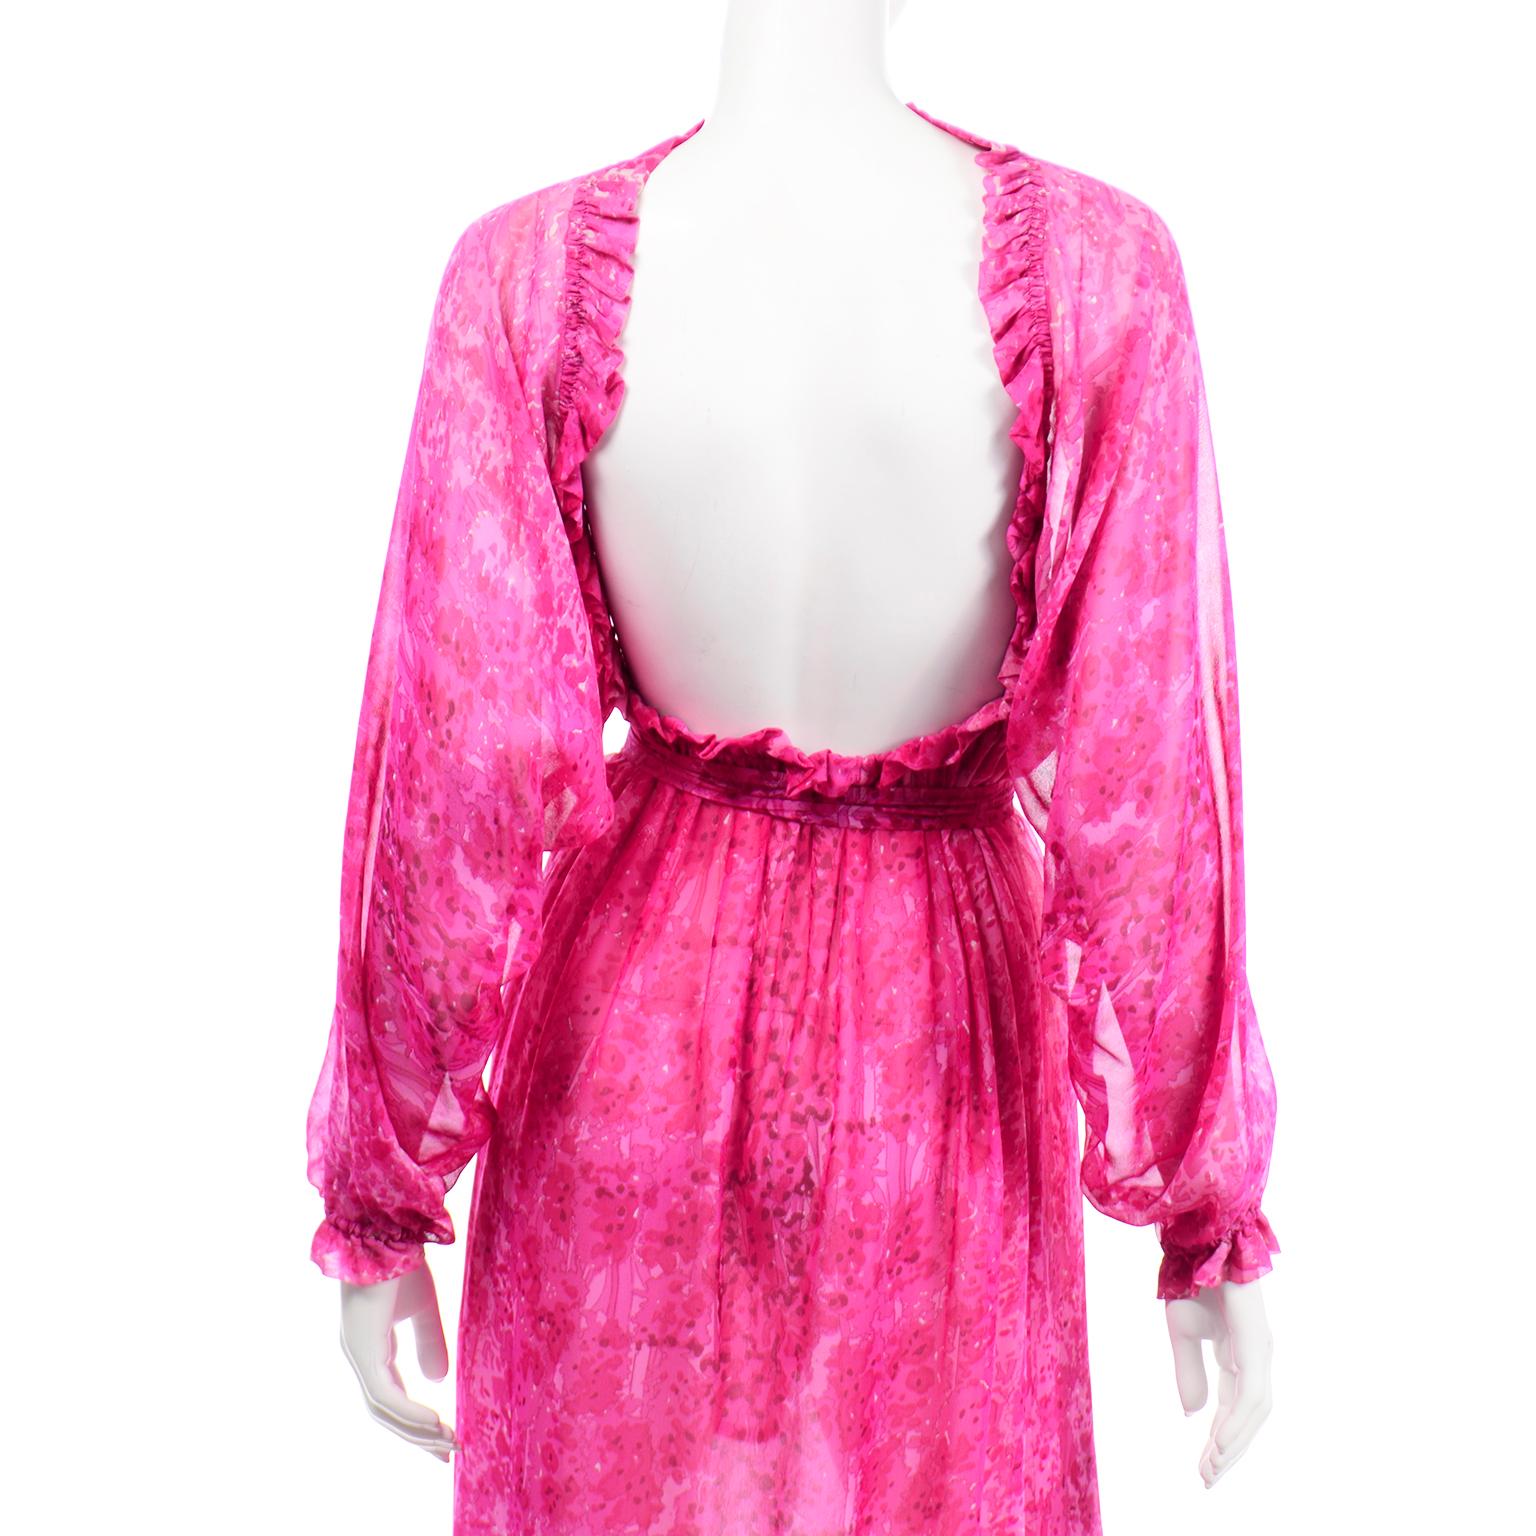 Vintage 1970s Givenchy Sheer Pink Print Silk Chiffon Evening Dress w Low Back 8